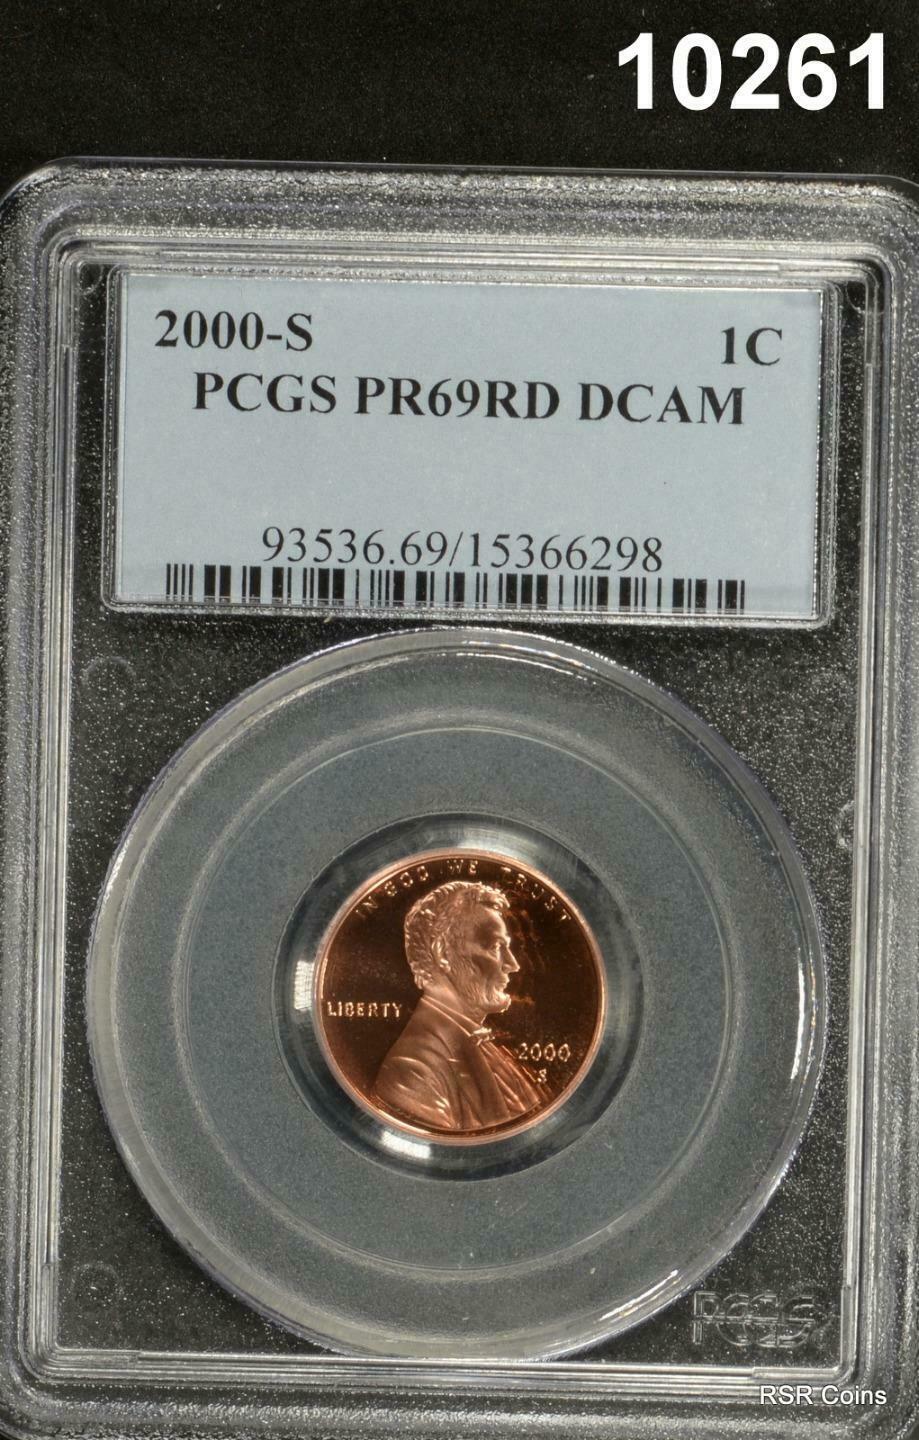 1999 S - 2008 S LNCOLN CENT 10 COIN SET PCGS CERTIFIED PR69 DCAM #10260-10269